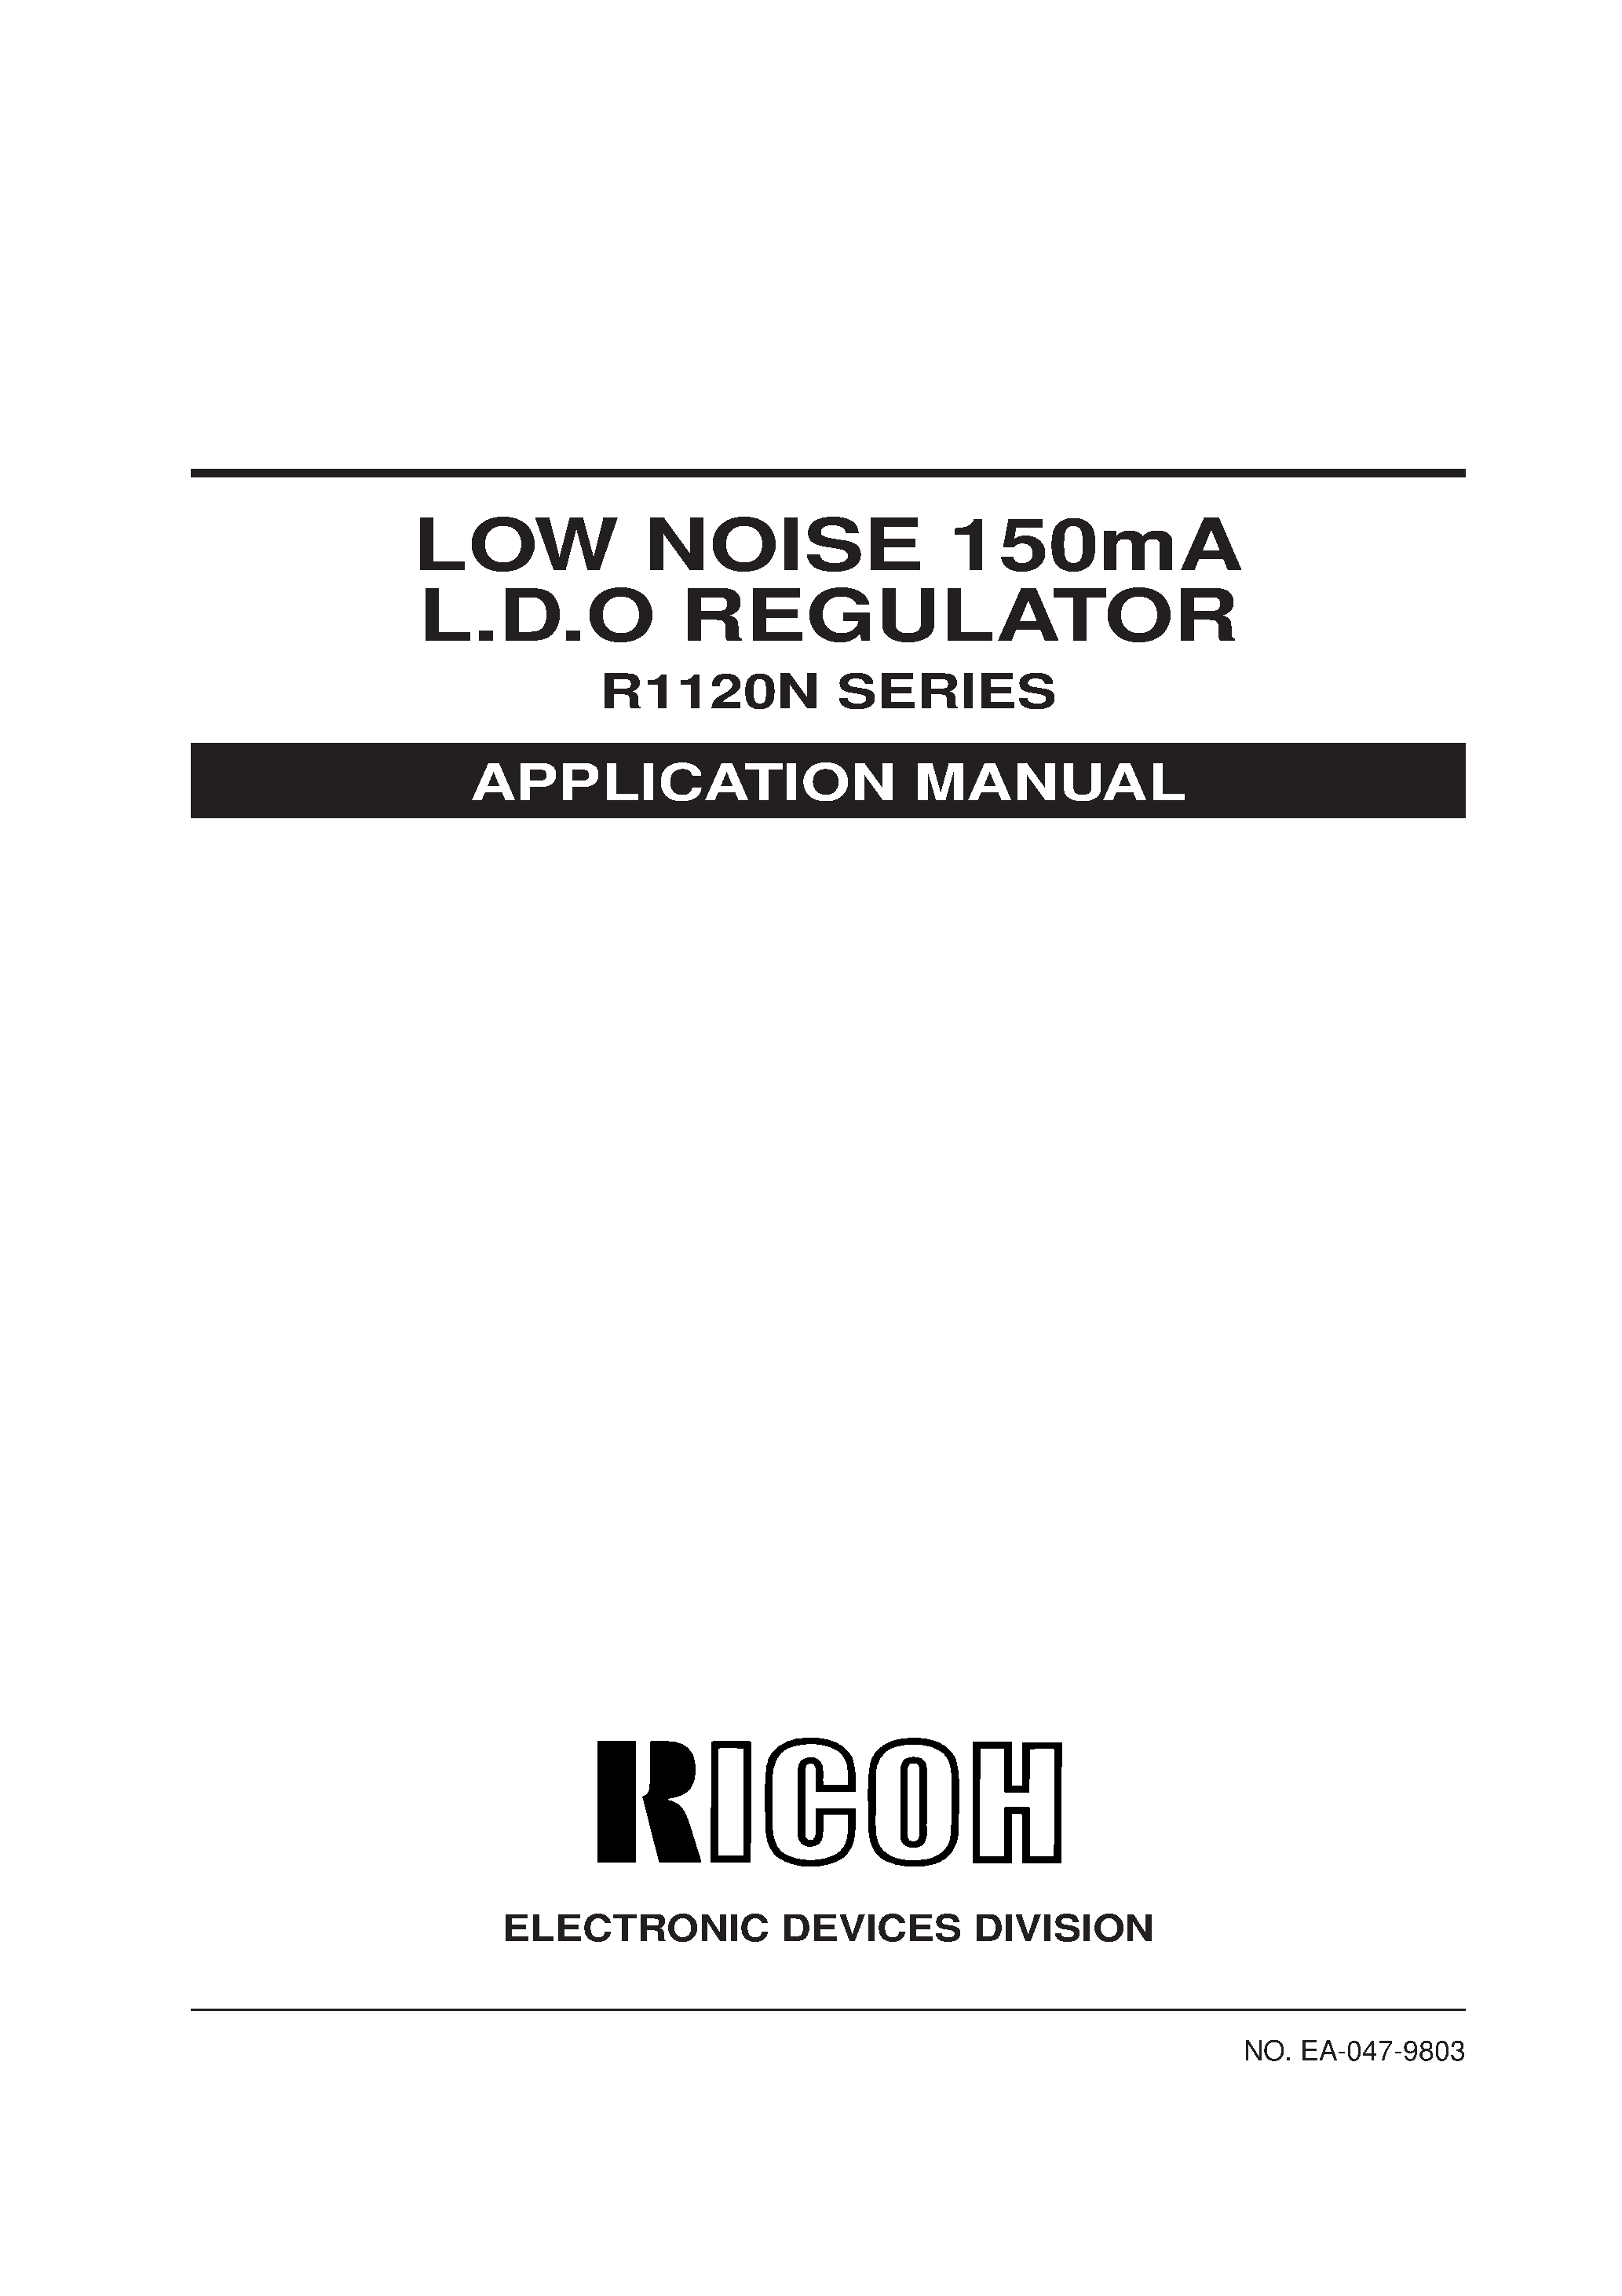 Datasheet R1120N301B - LOW NOISE 150mA L.D.O REGULATOR page 1